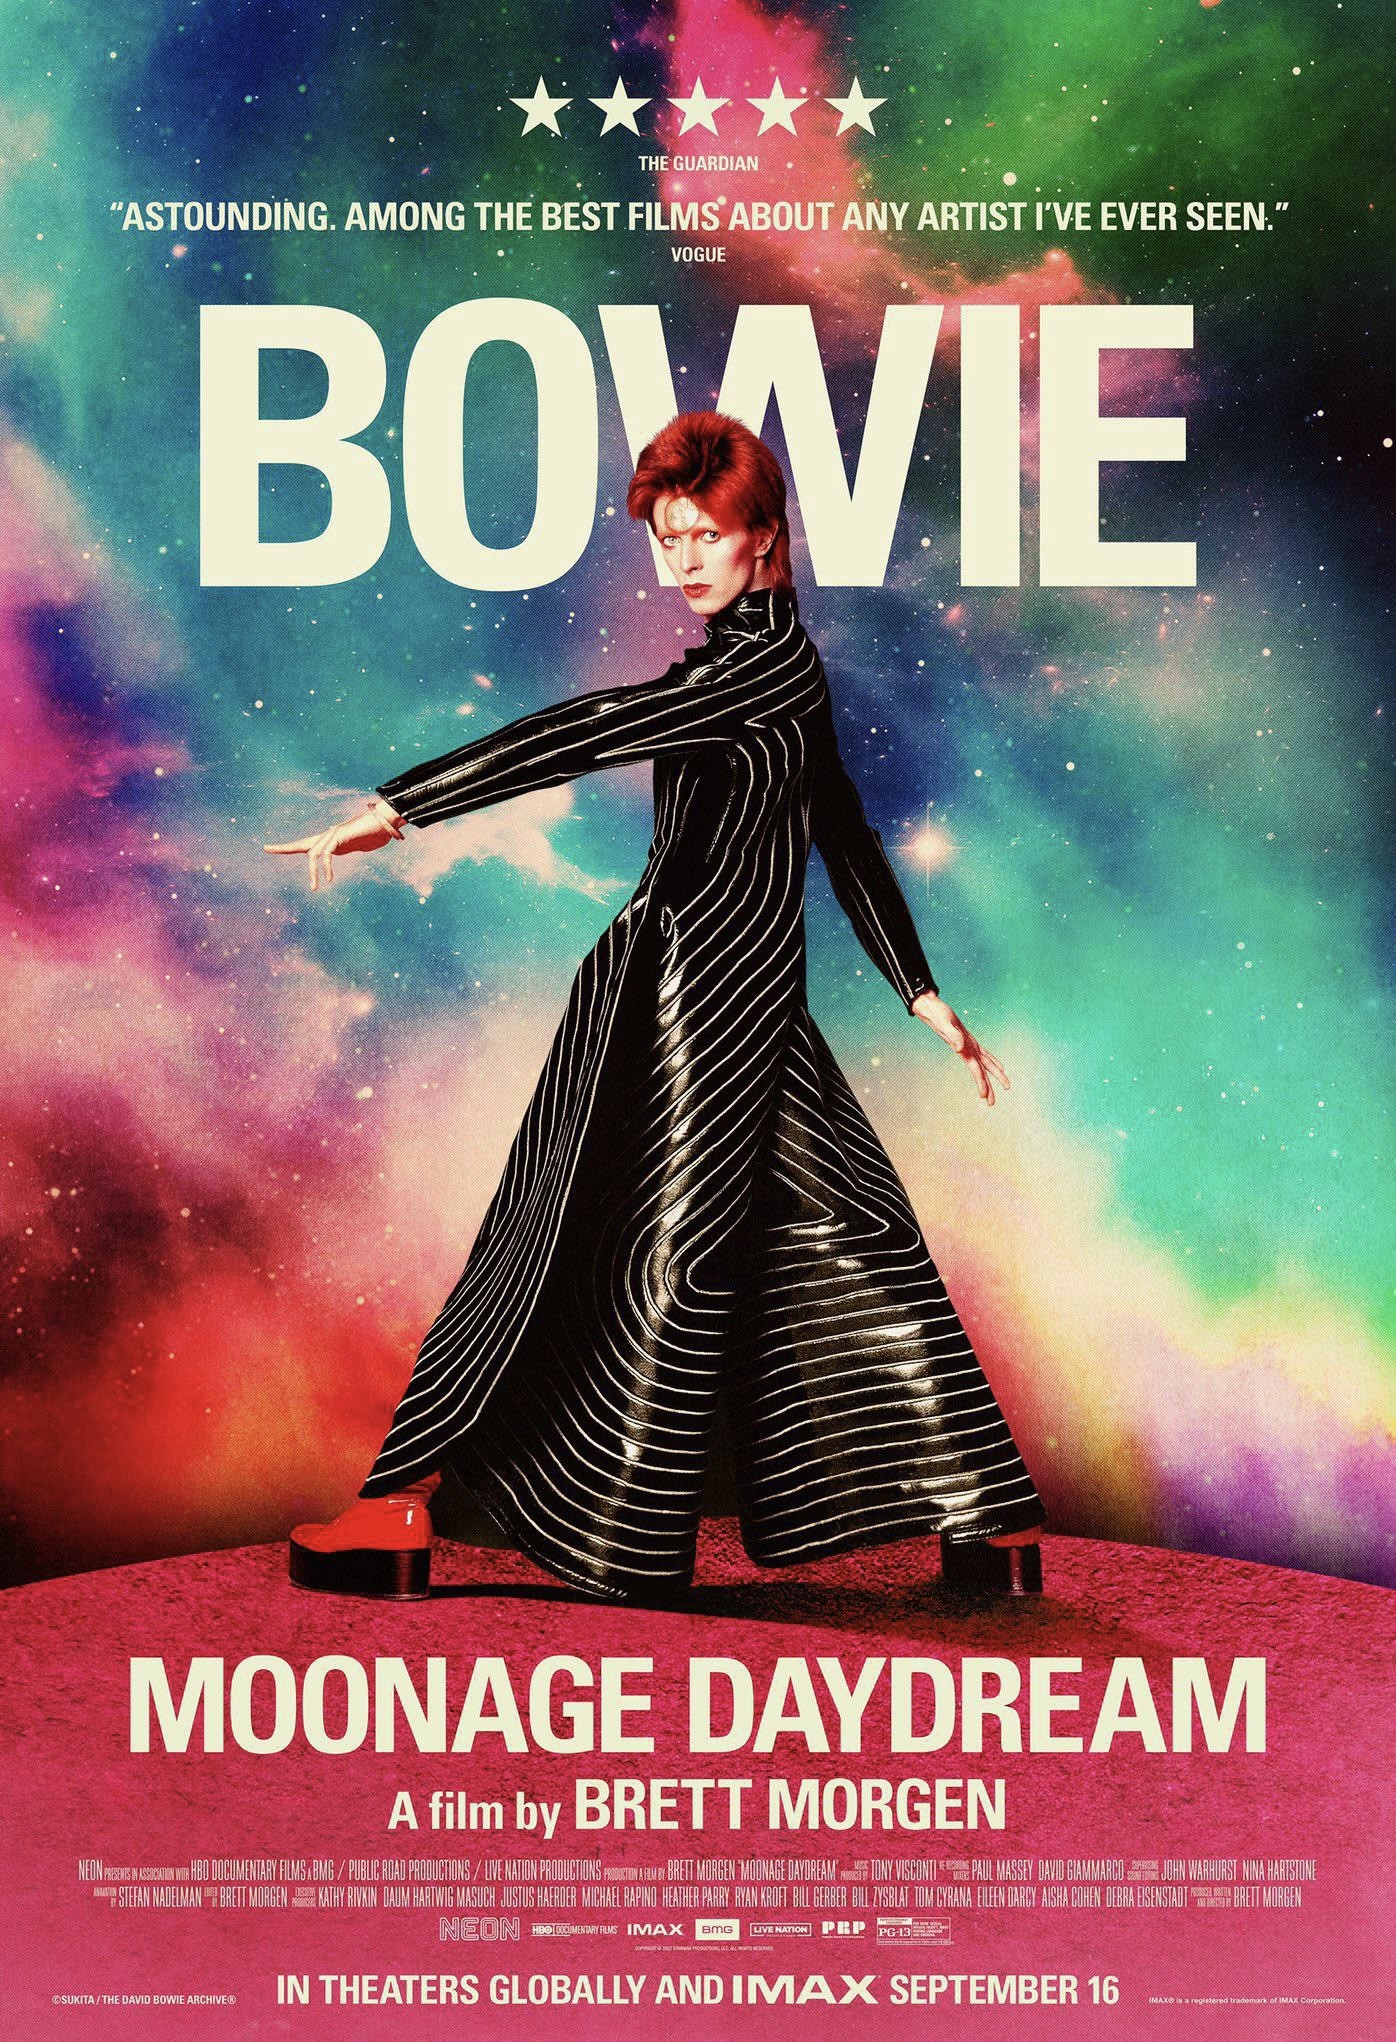 David-Bowie-film-IMAX.jpg